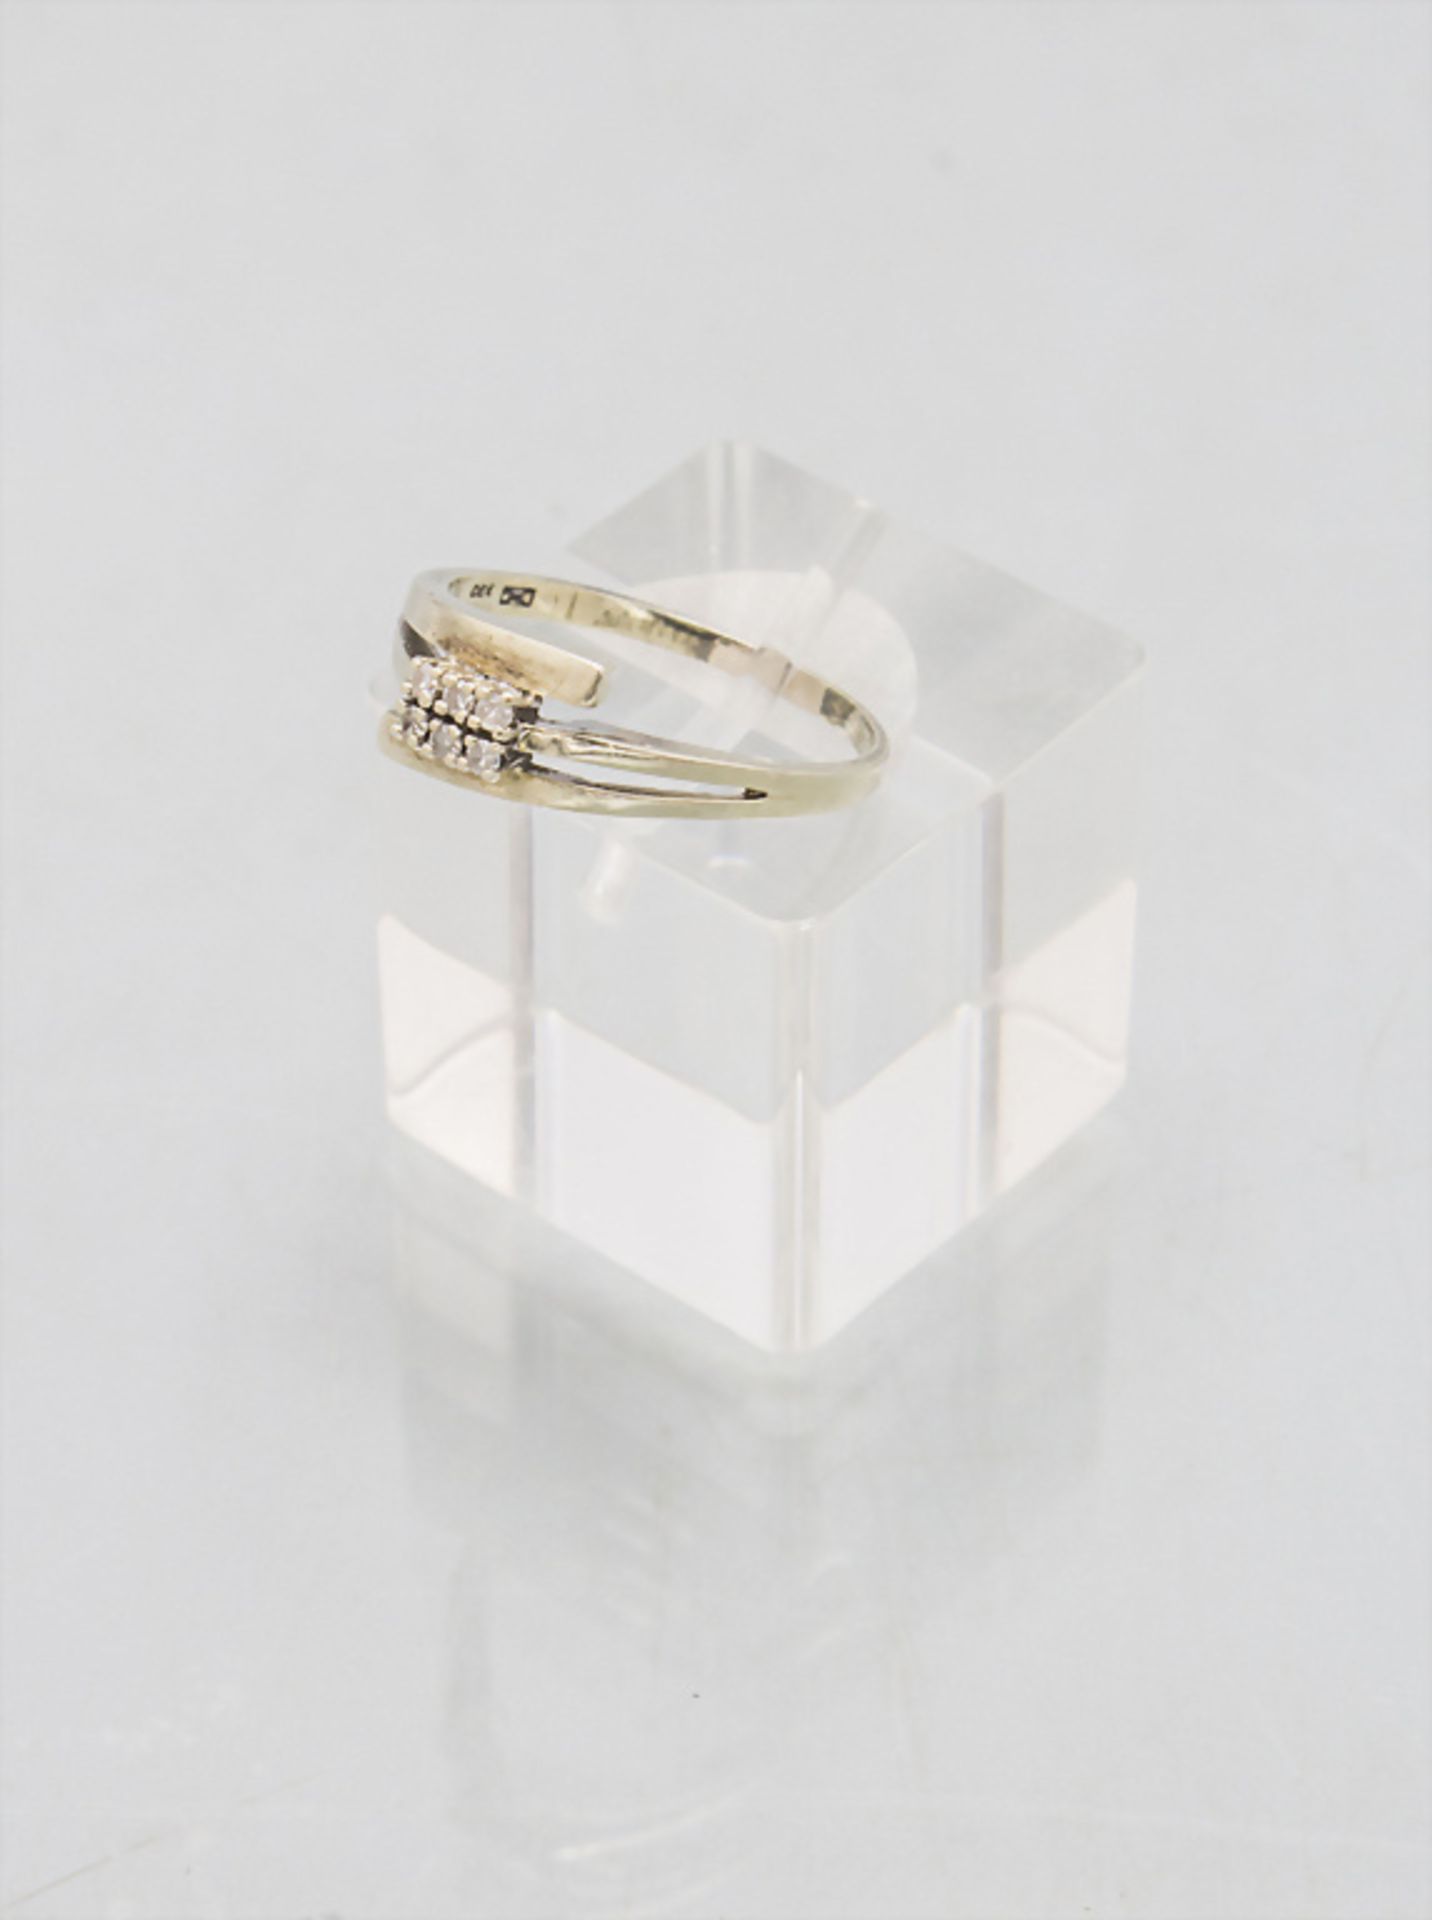 Damenring mit Diamanten / A ladies 8 ct gold ring with diamonds - Bild 4 aus 4